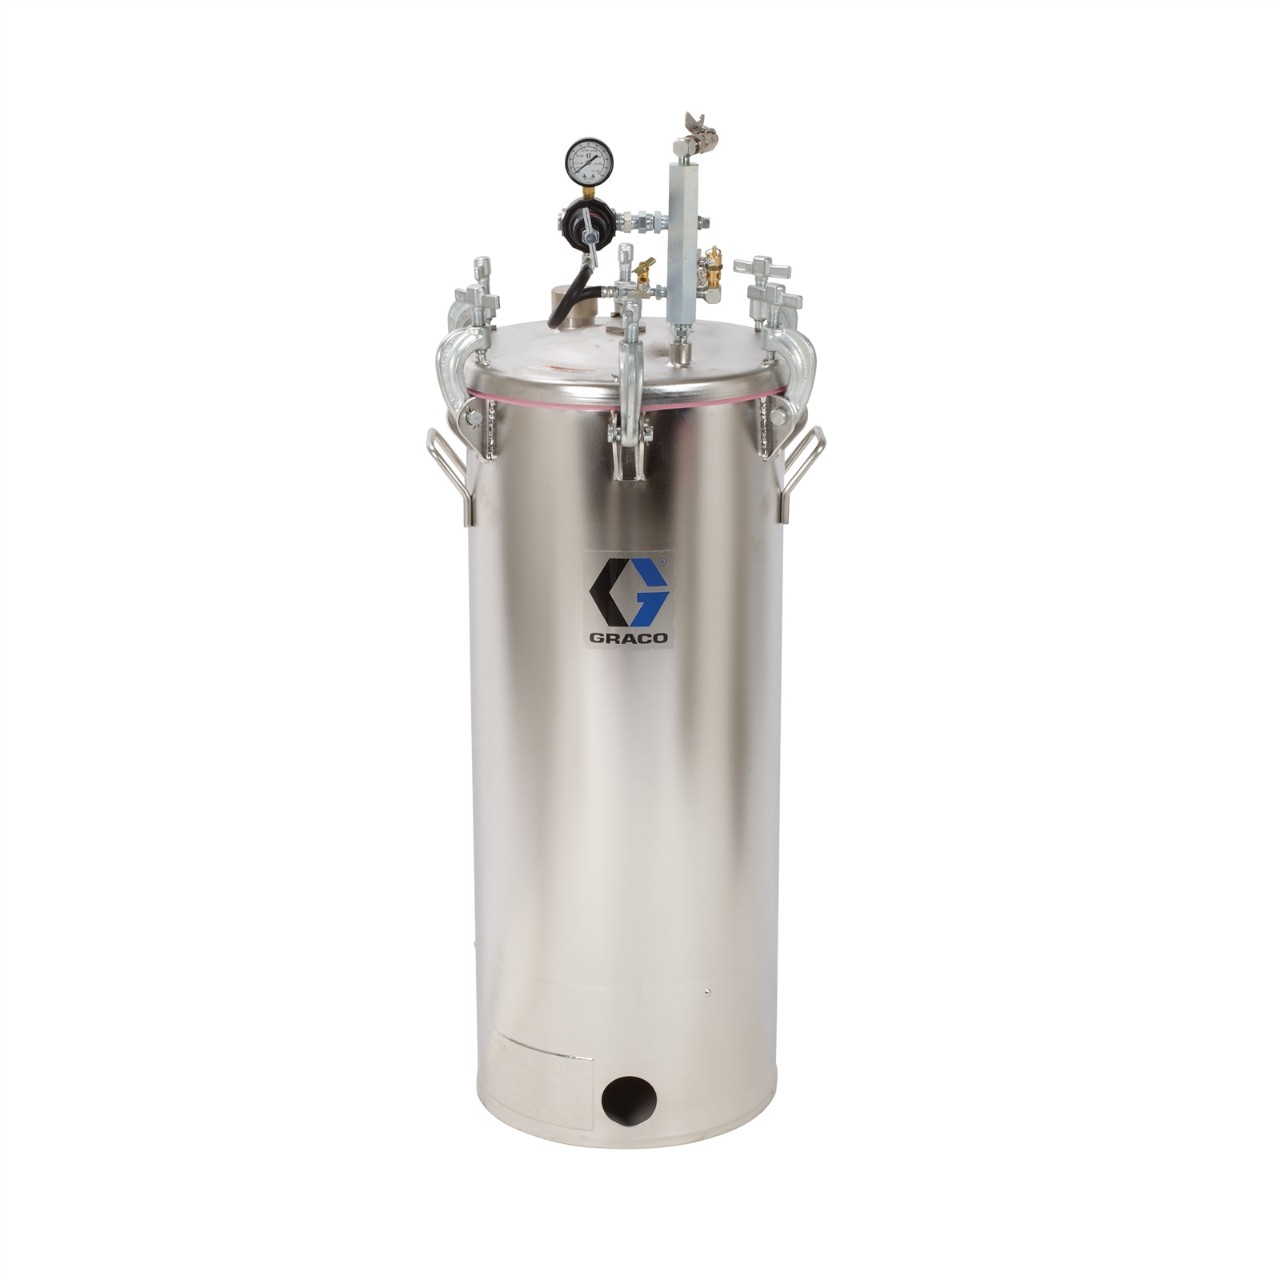 15-gallon pressure pot without agitator